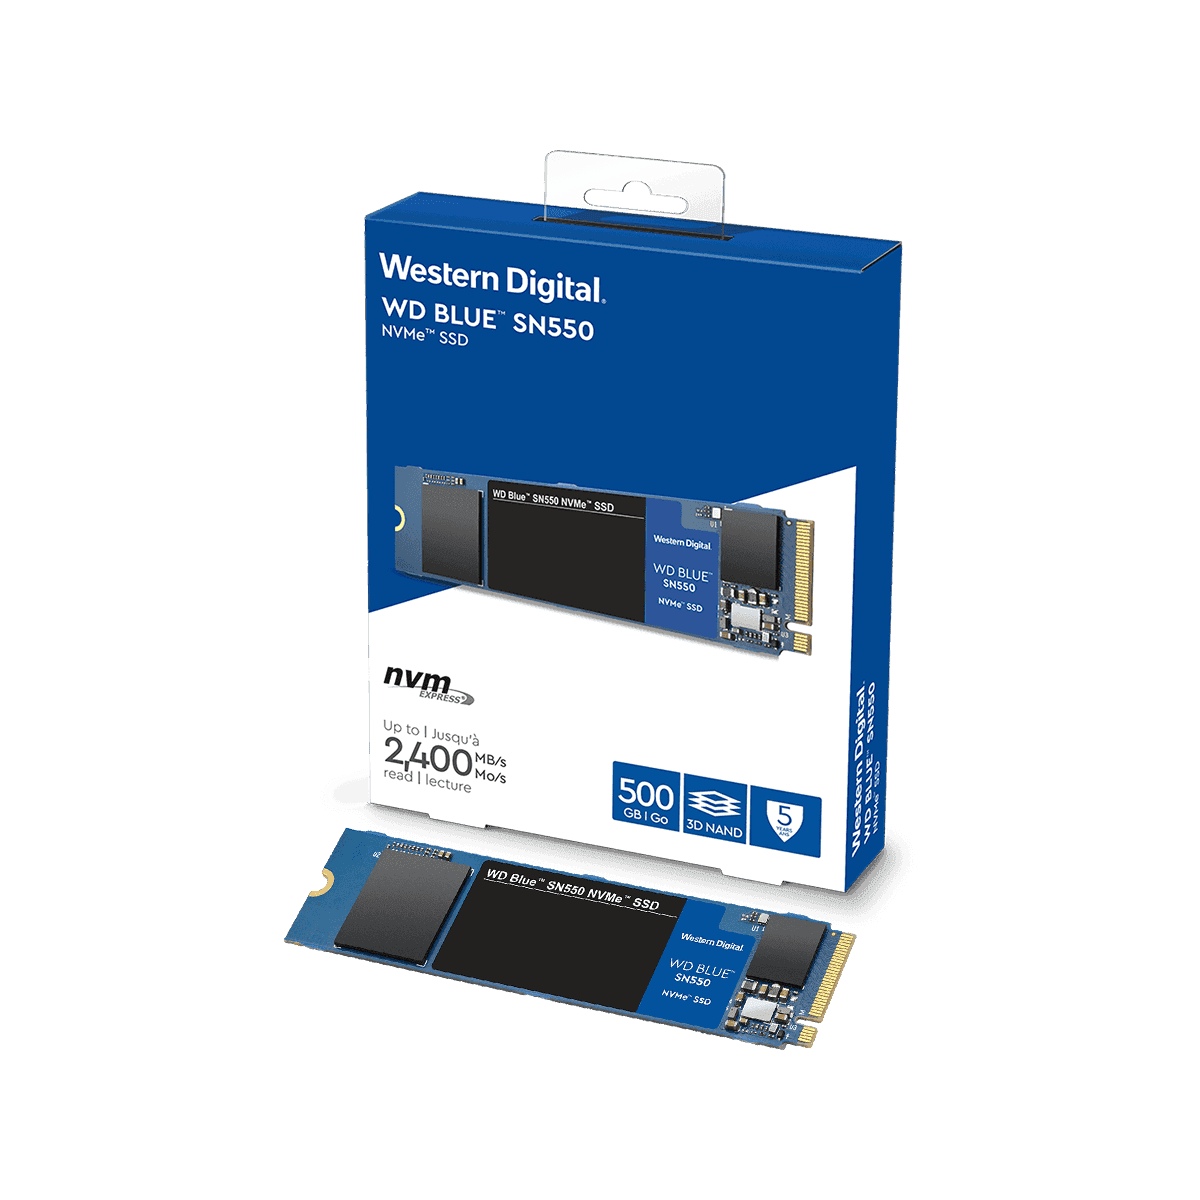 【販売終了】WesternDigital製 WD BLUE SN550シリーズ NVMe M.2 SSD 500GB WDS500G2B0C